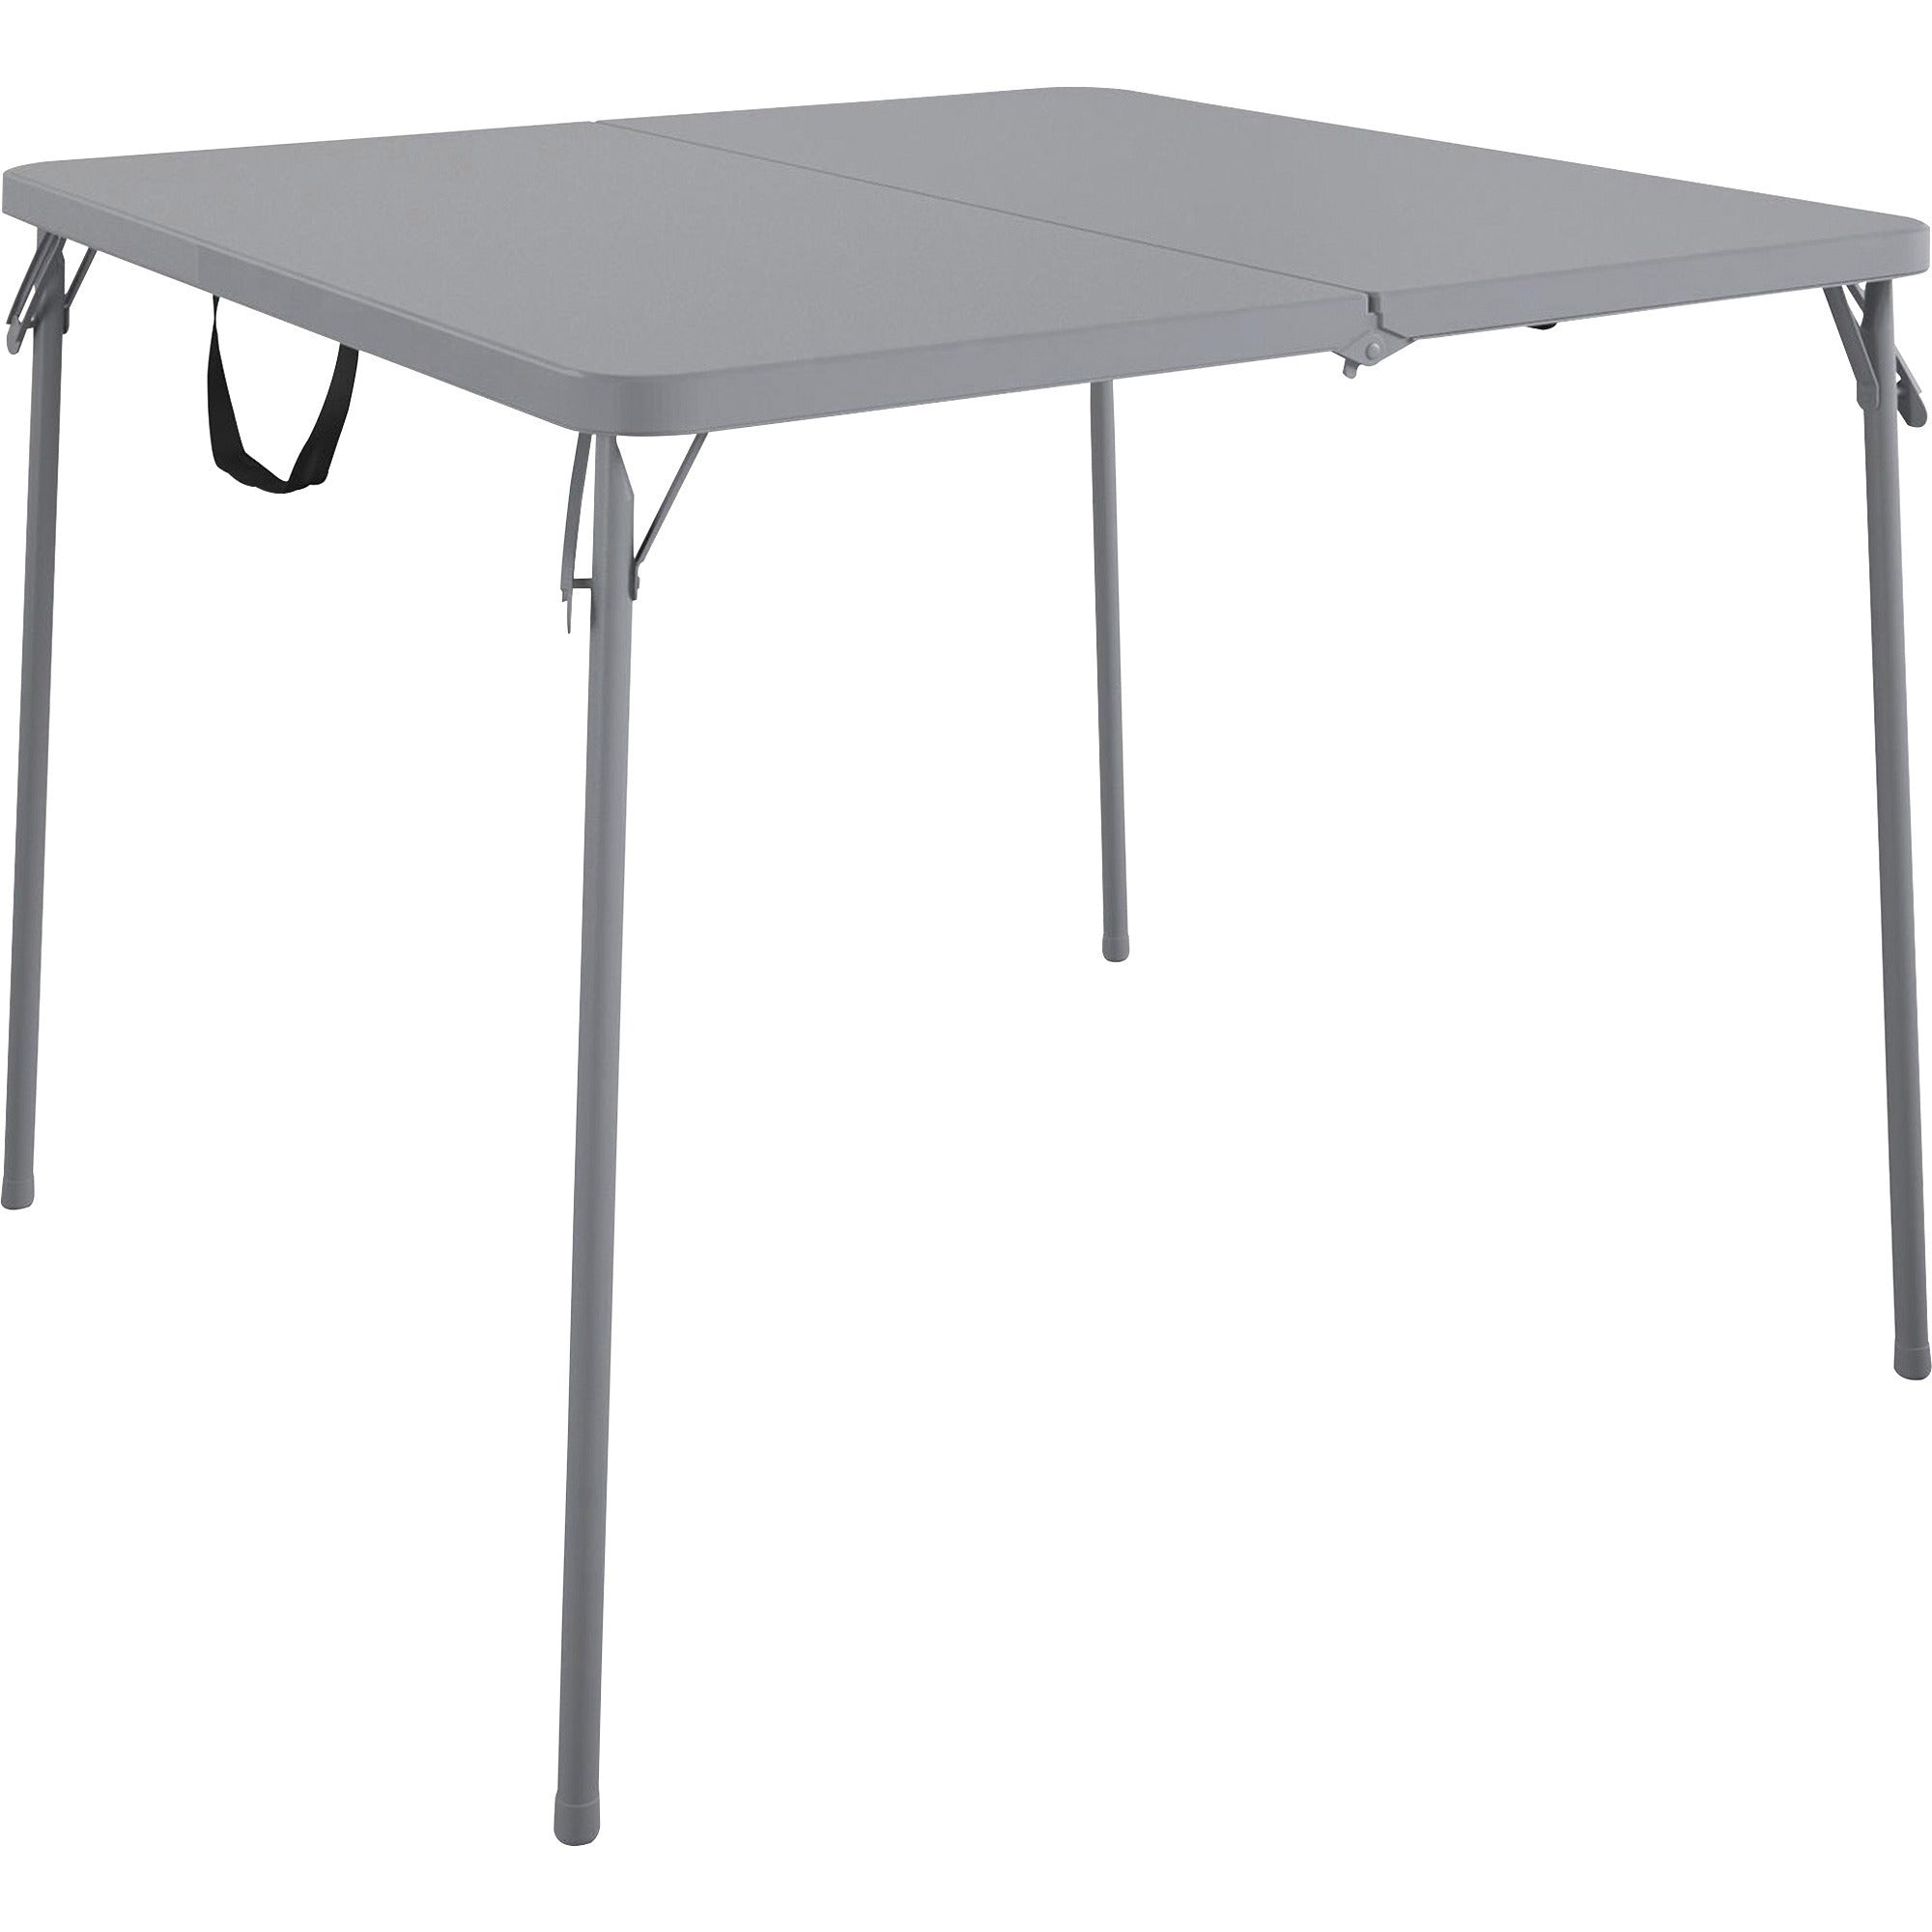 cosco-xl-fold-in-half-card-table-four-leg-base-4-legs-200-lb-capacity-x-3850-table-top-width-x-3850-table-top-depth-2950-height-gray-1-each_csc14036gry1e - 1